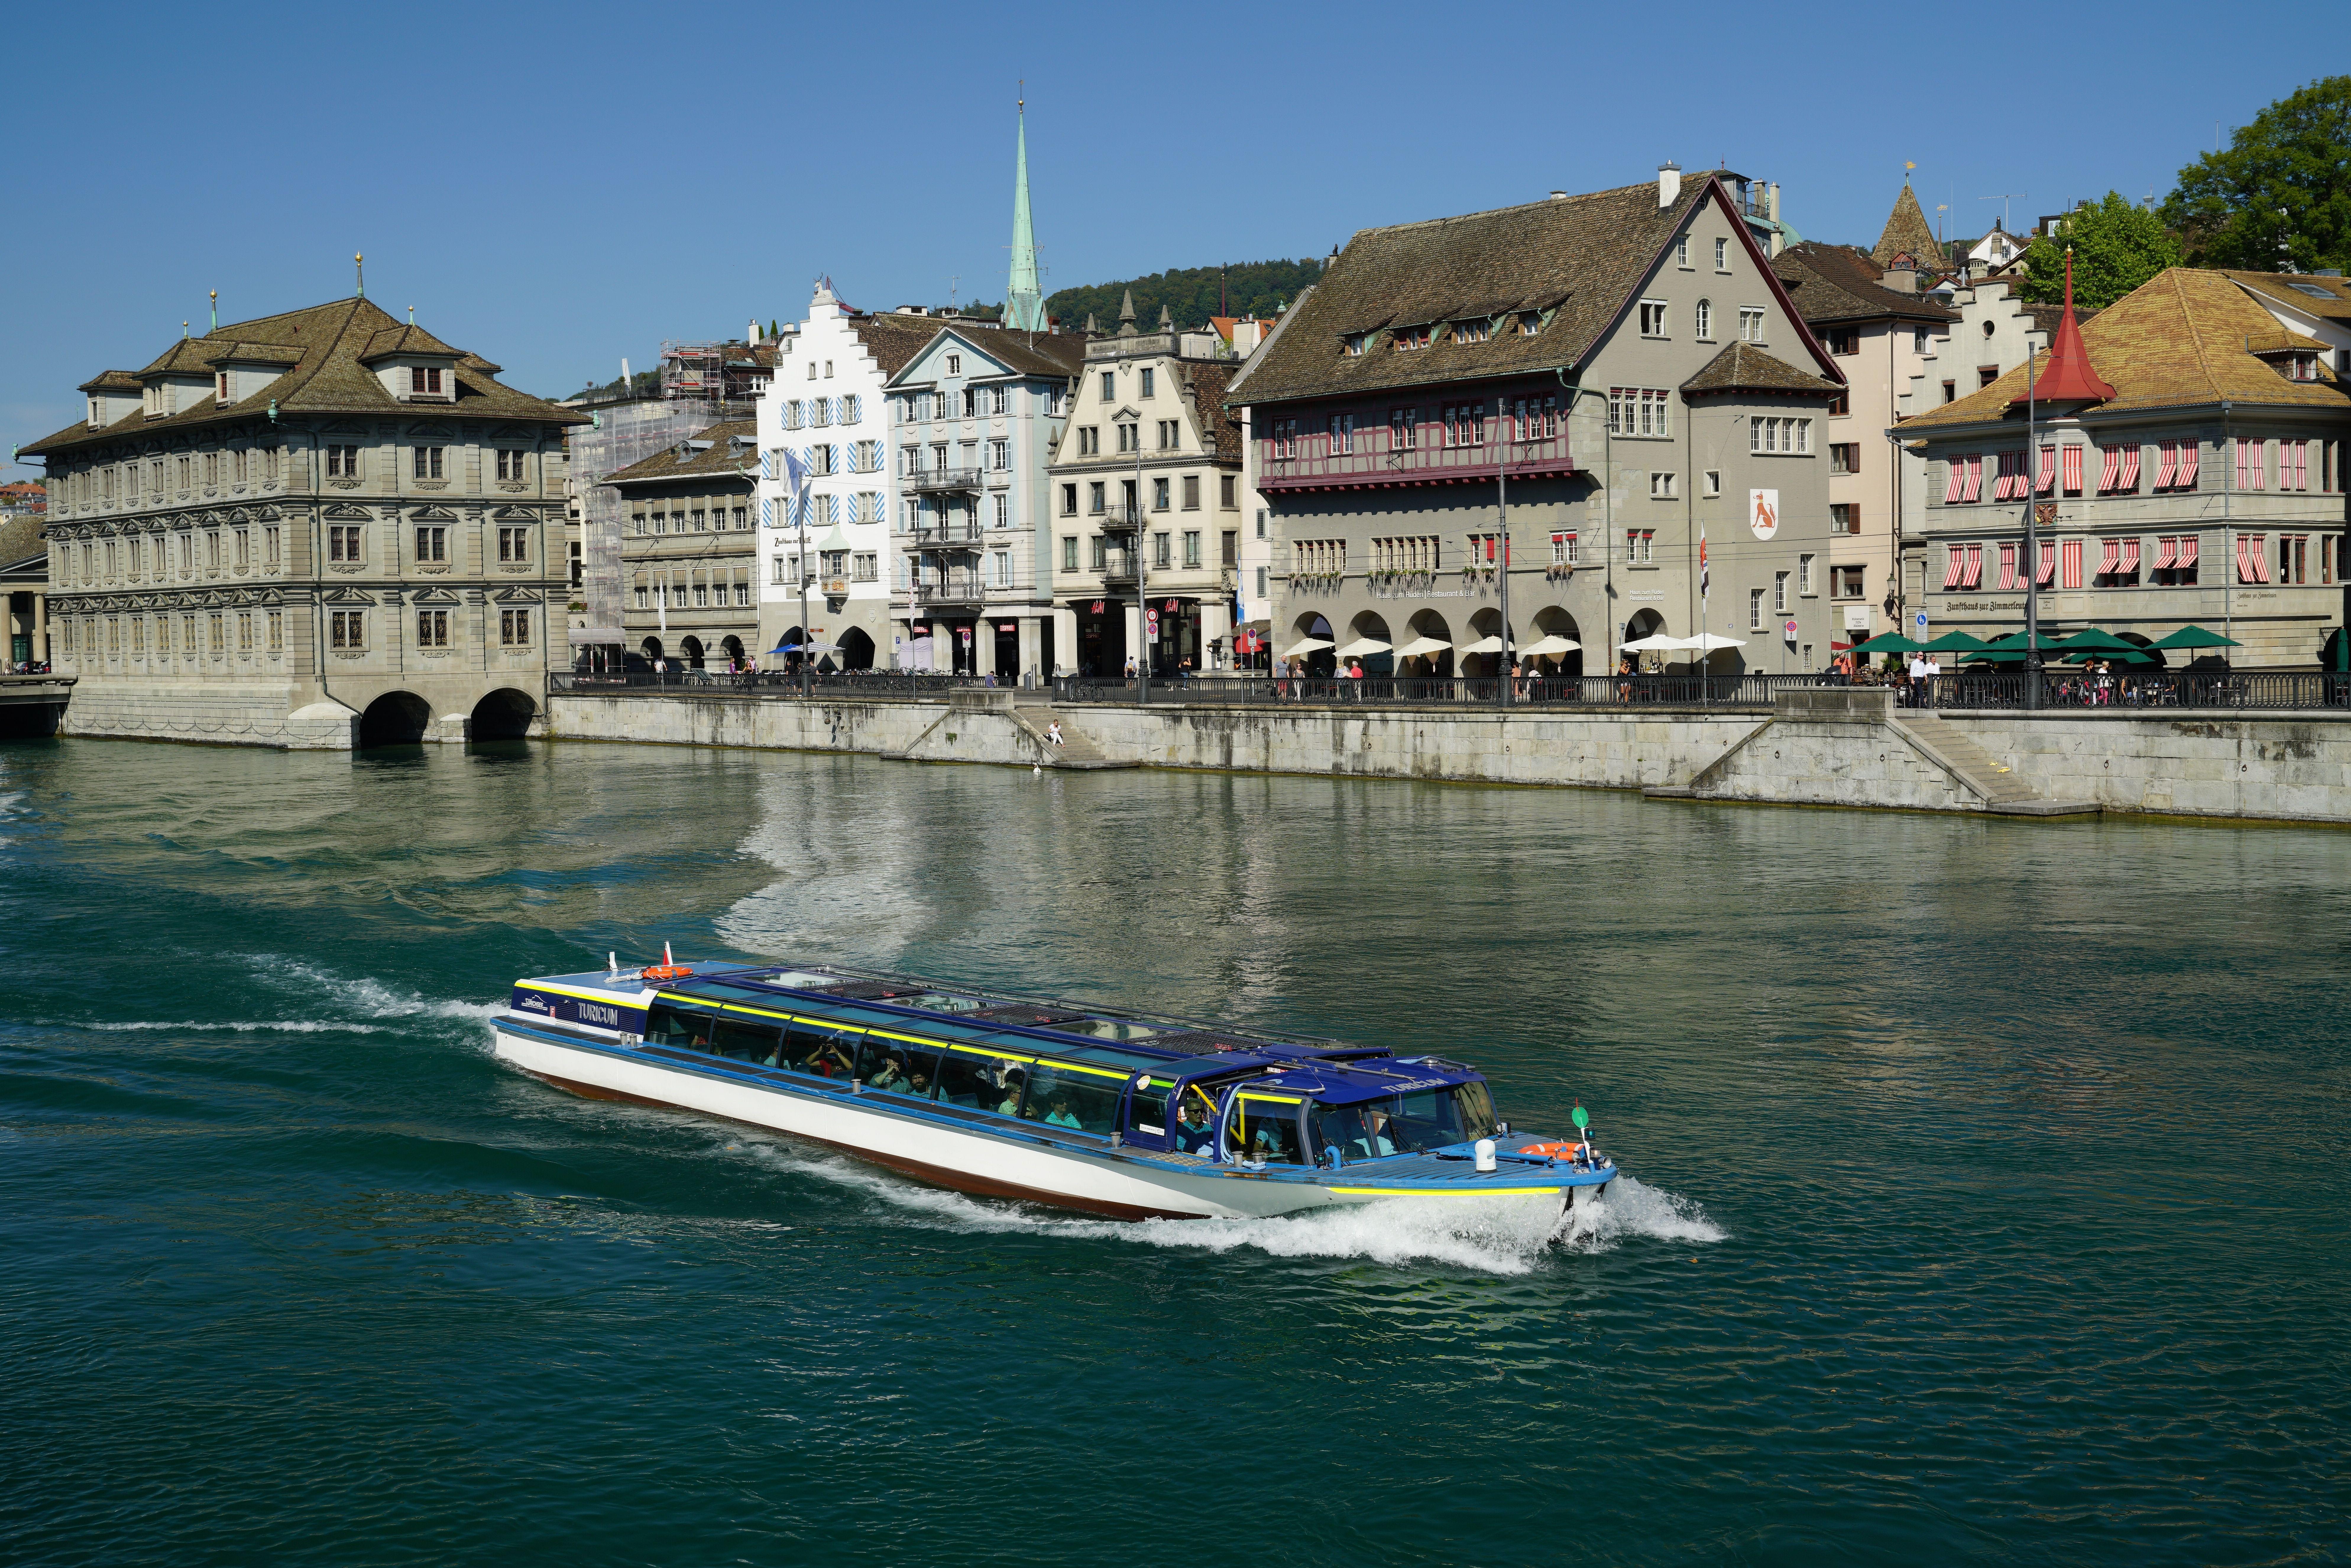 Zurich city boat in river.jpg